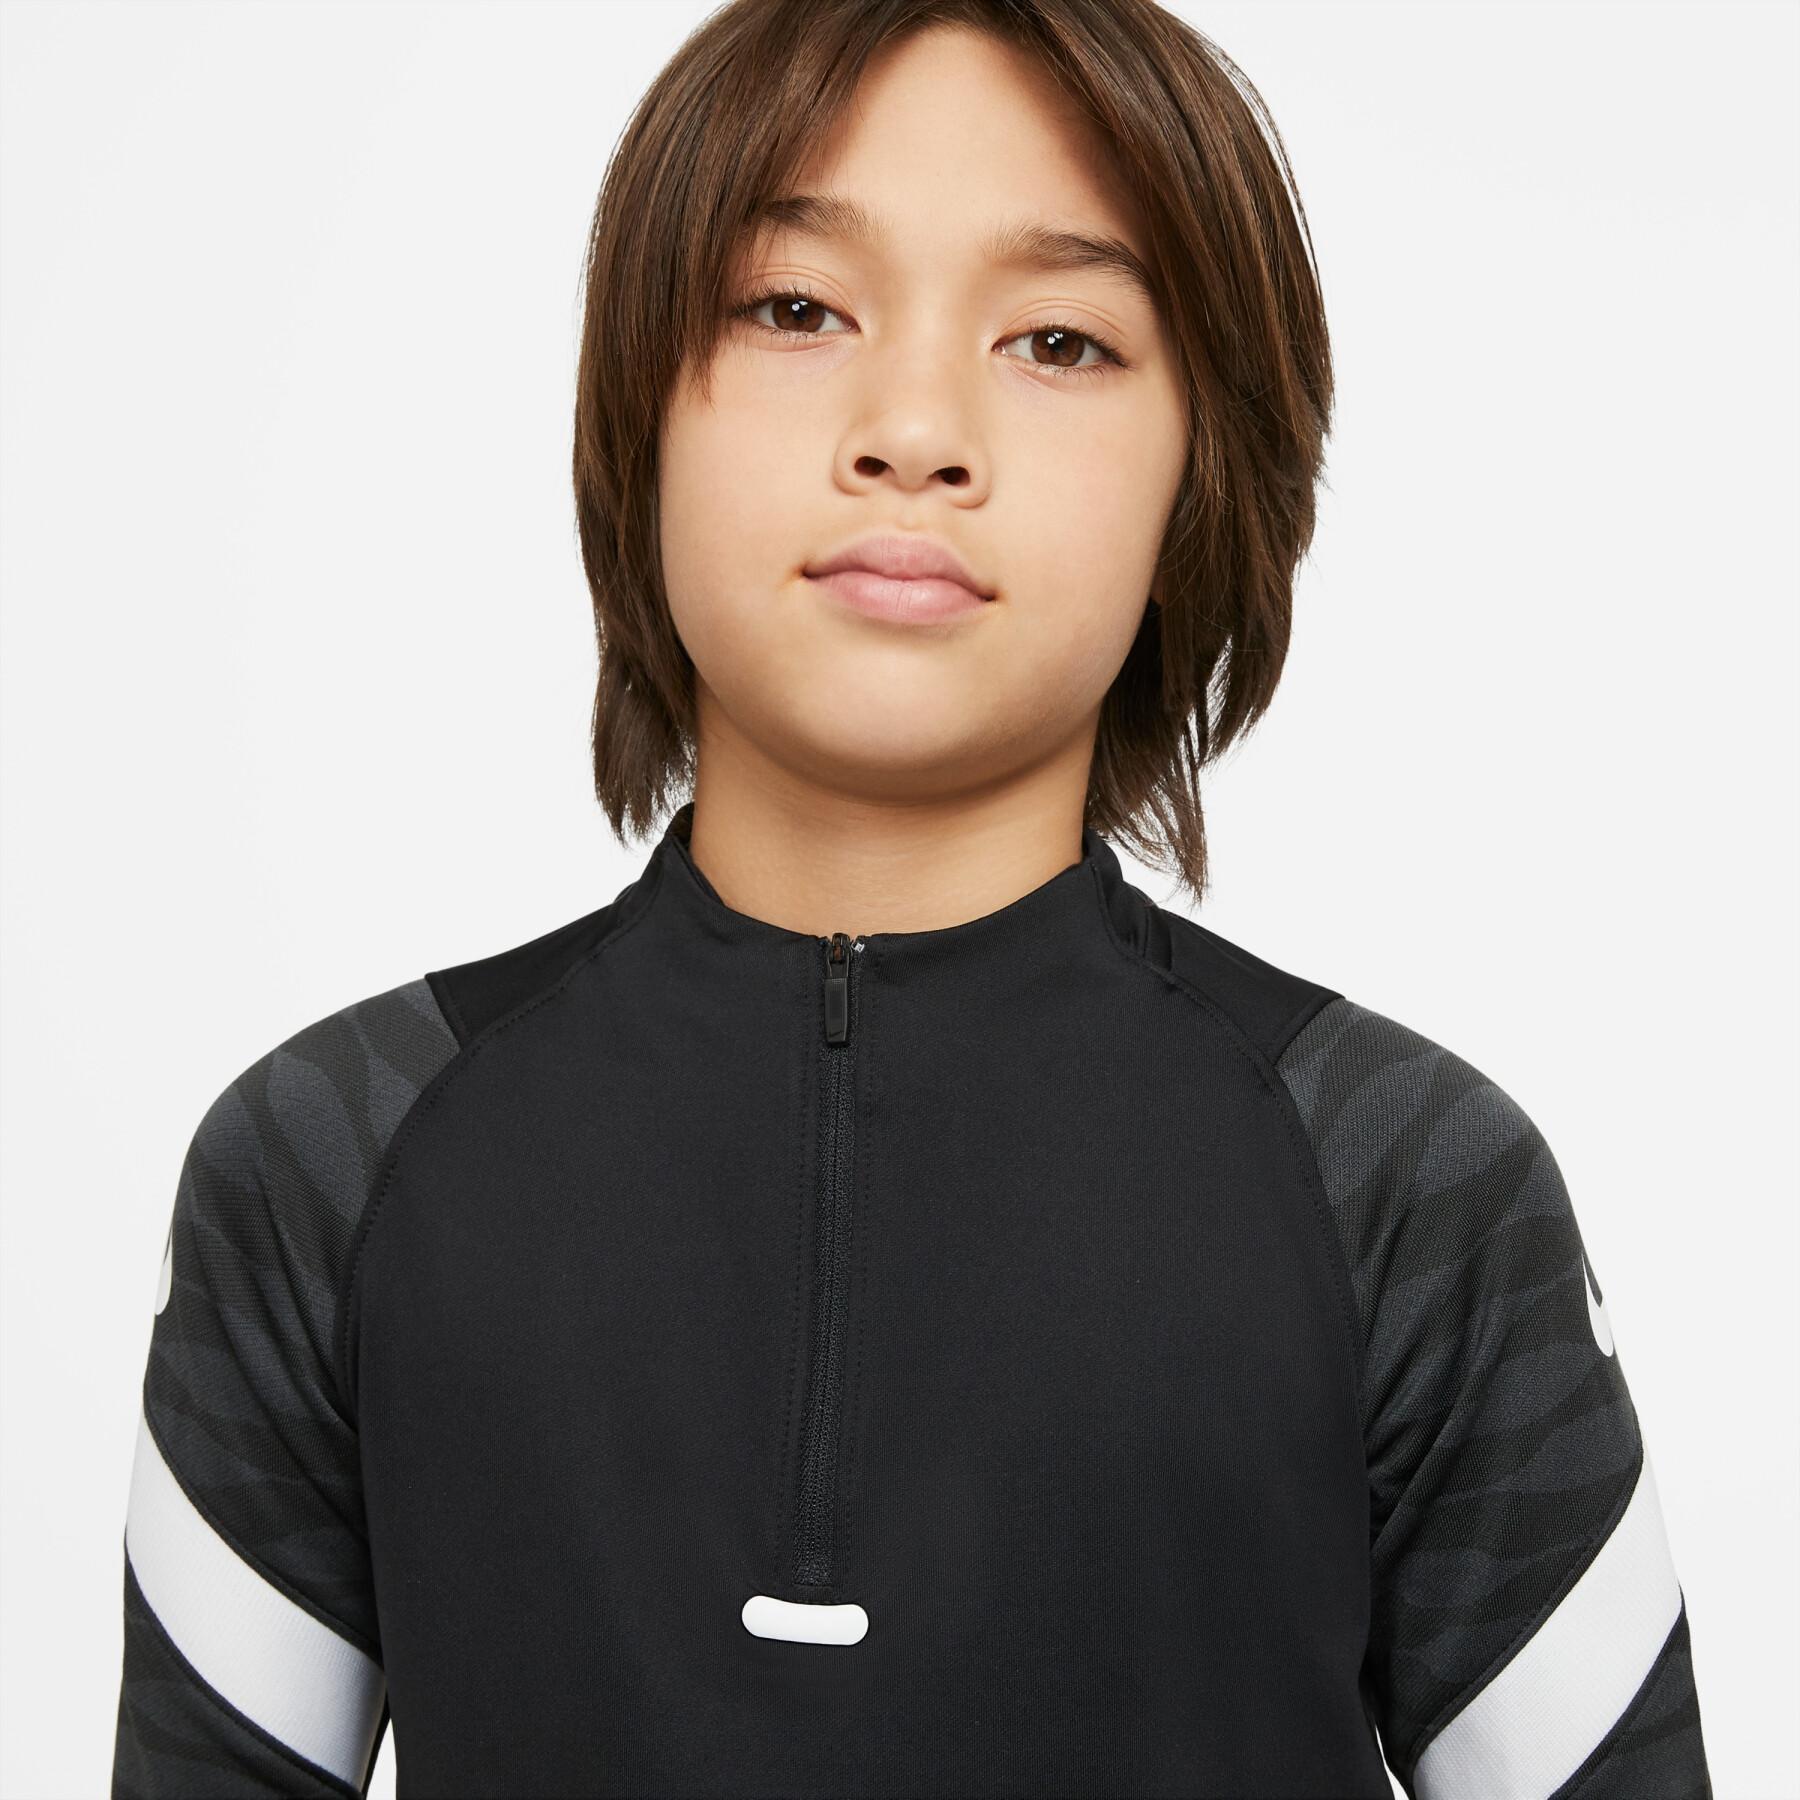 Sweatshirt child Nike Fit strike21